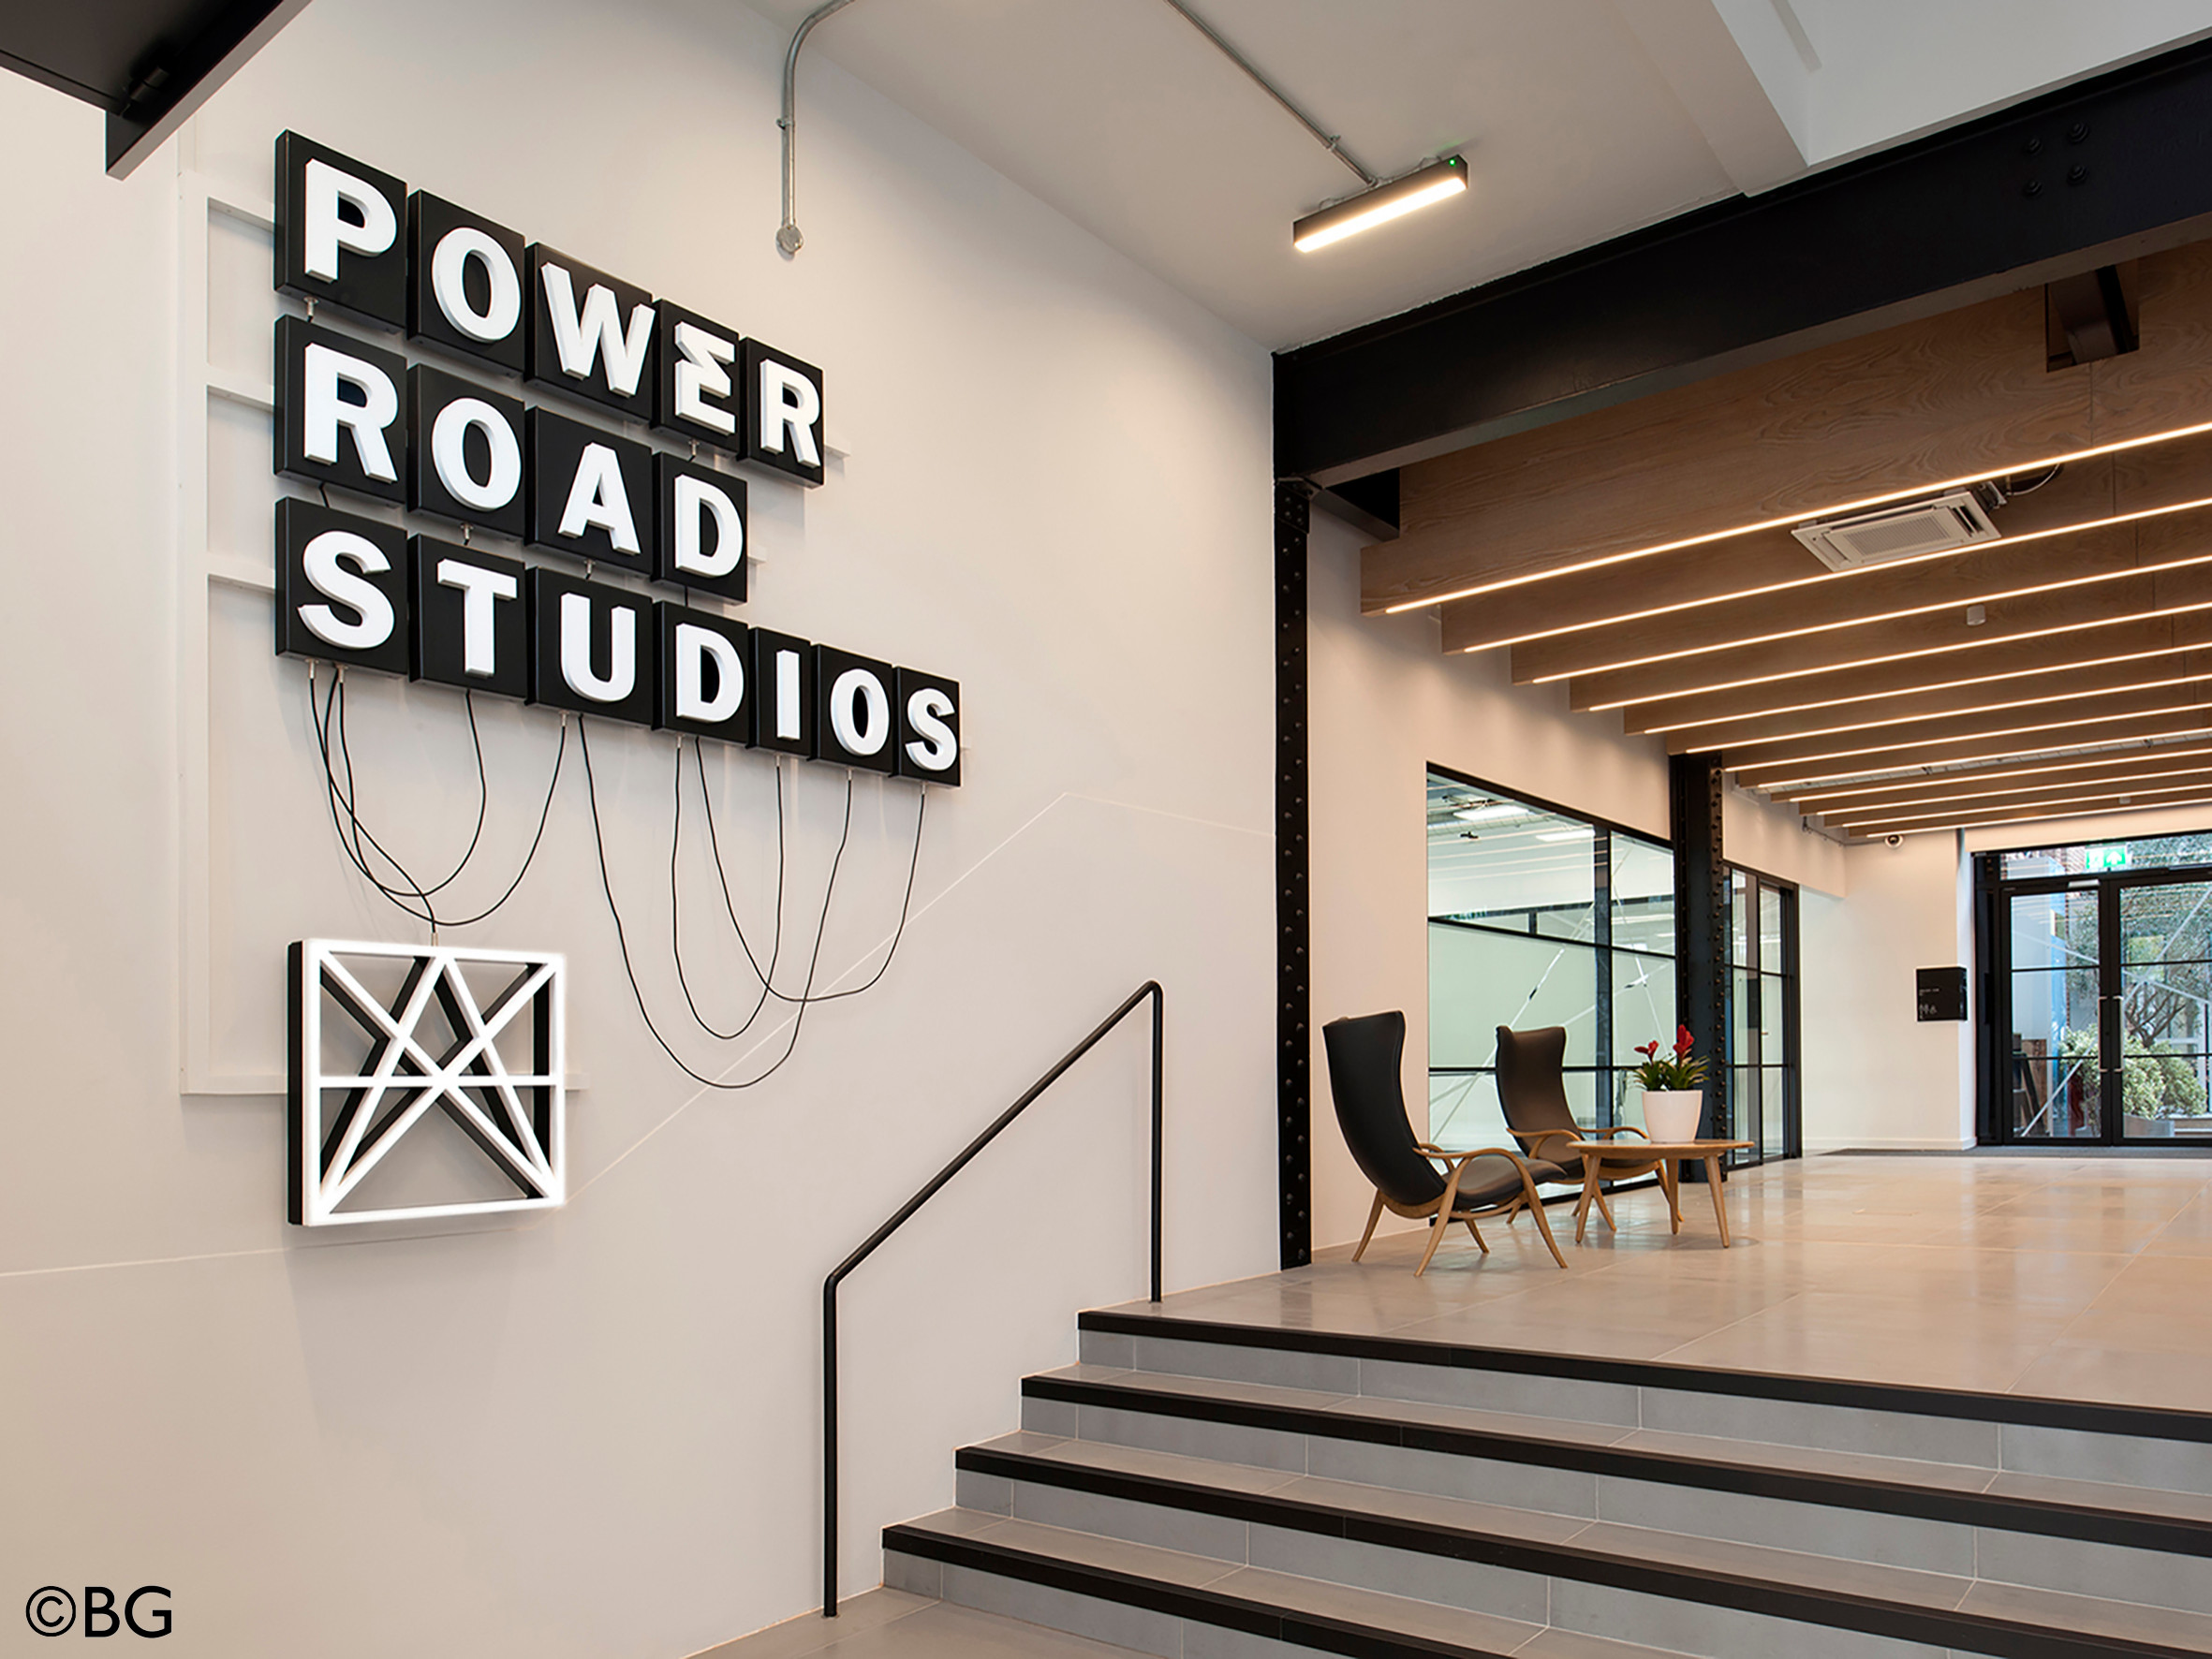 Power Road Studios